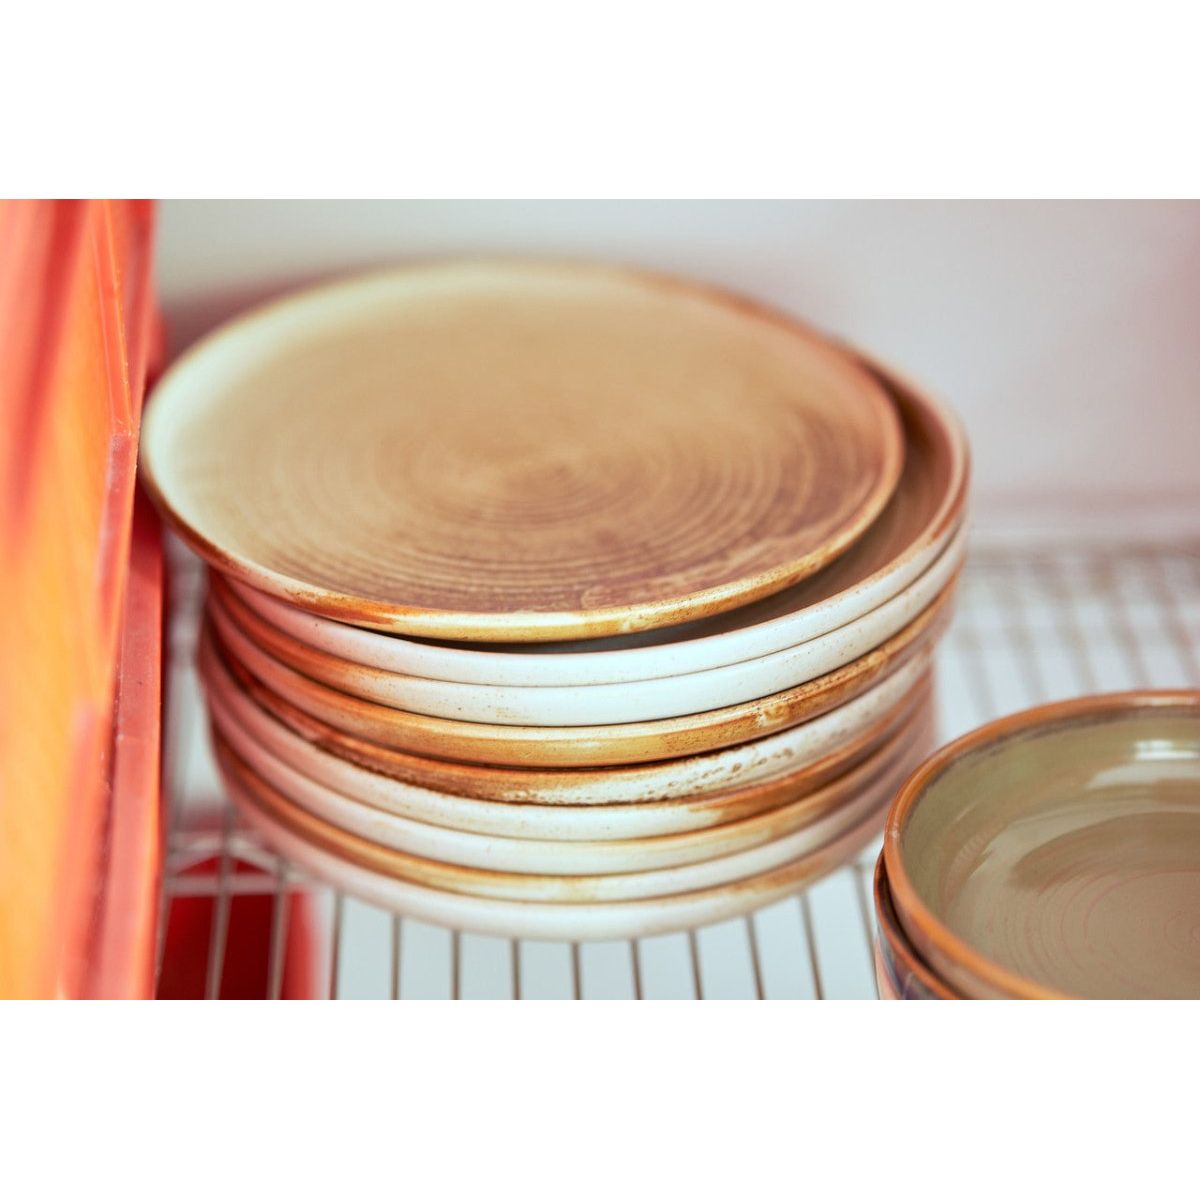 Chef ceramics: side plate, rustic cream/brown - House of Orange